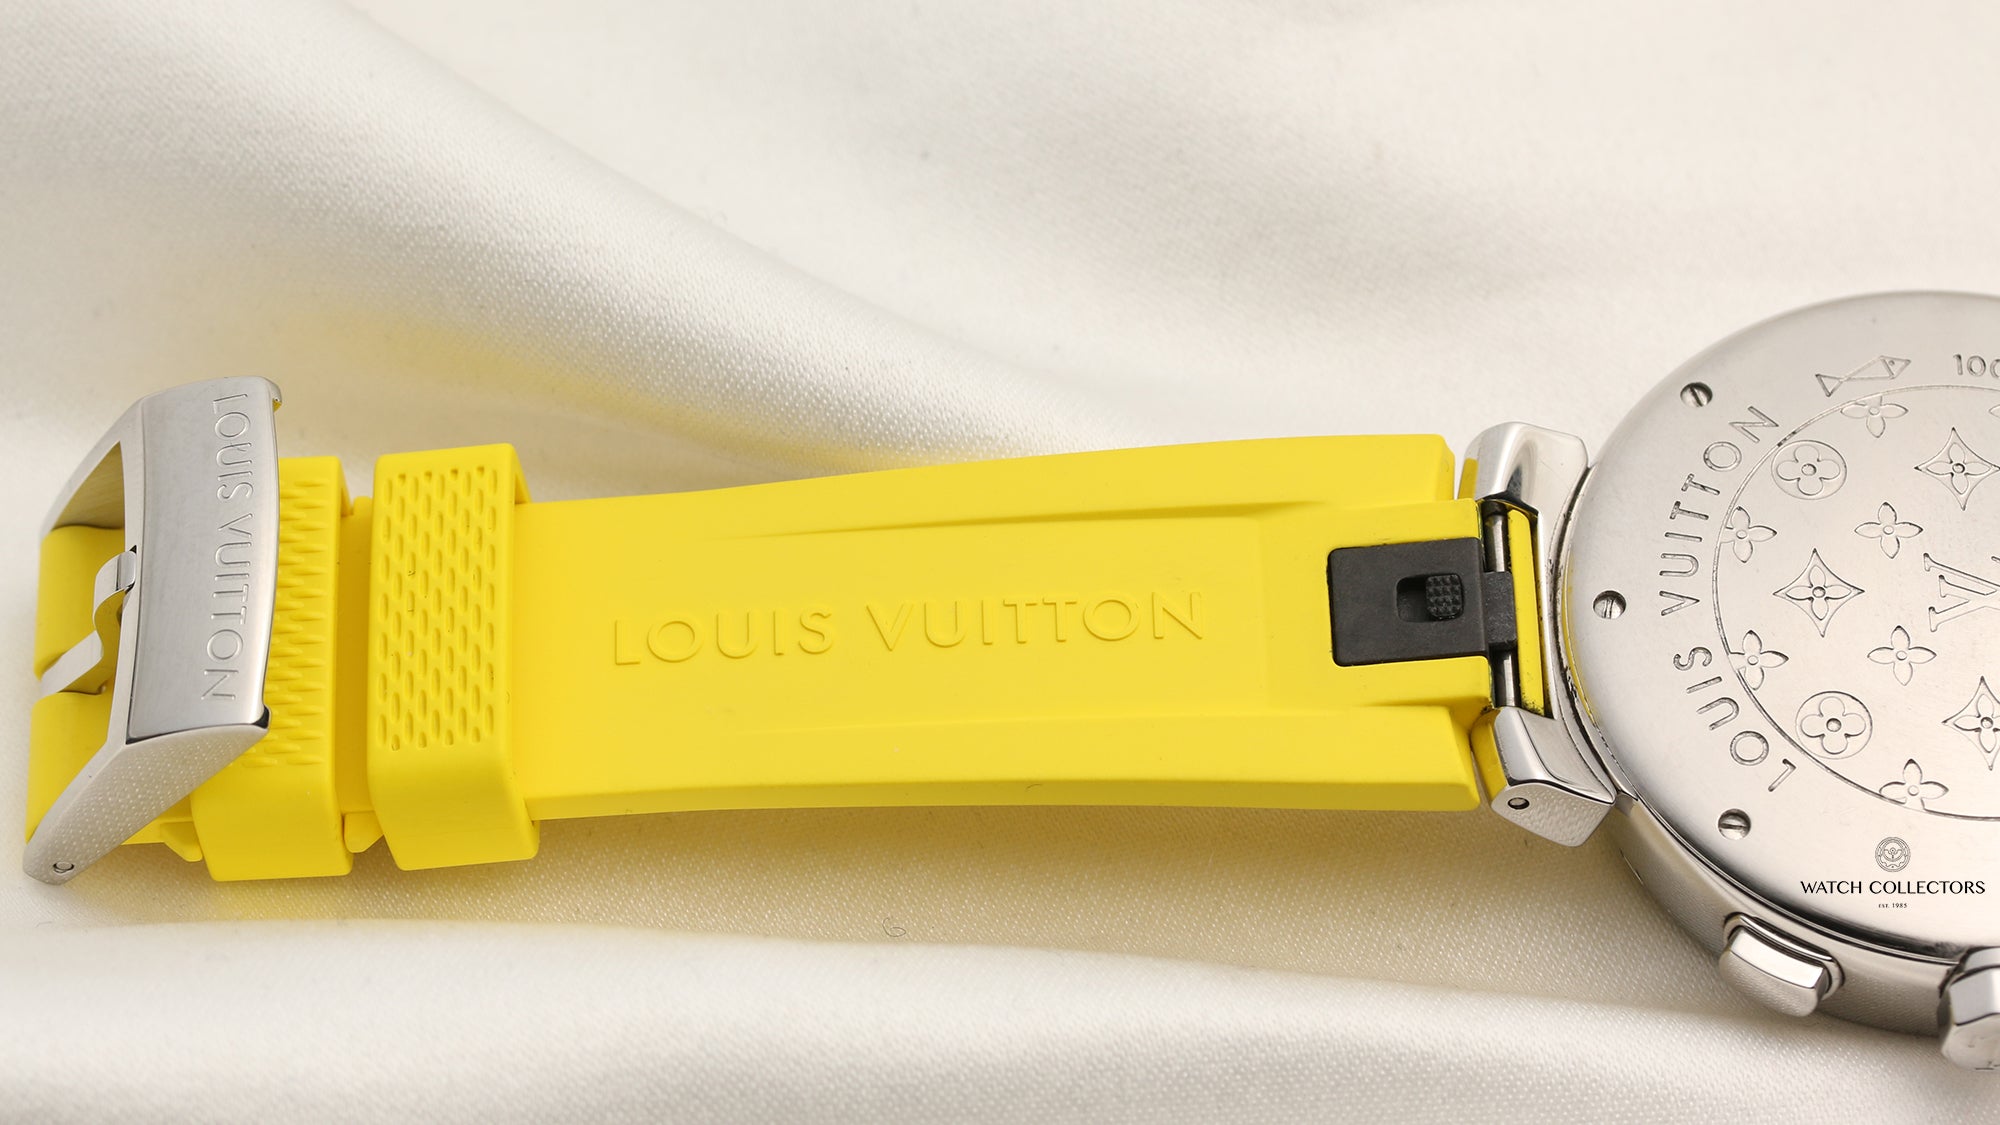 Louis Vuitton - 100% Original